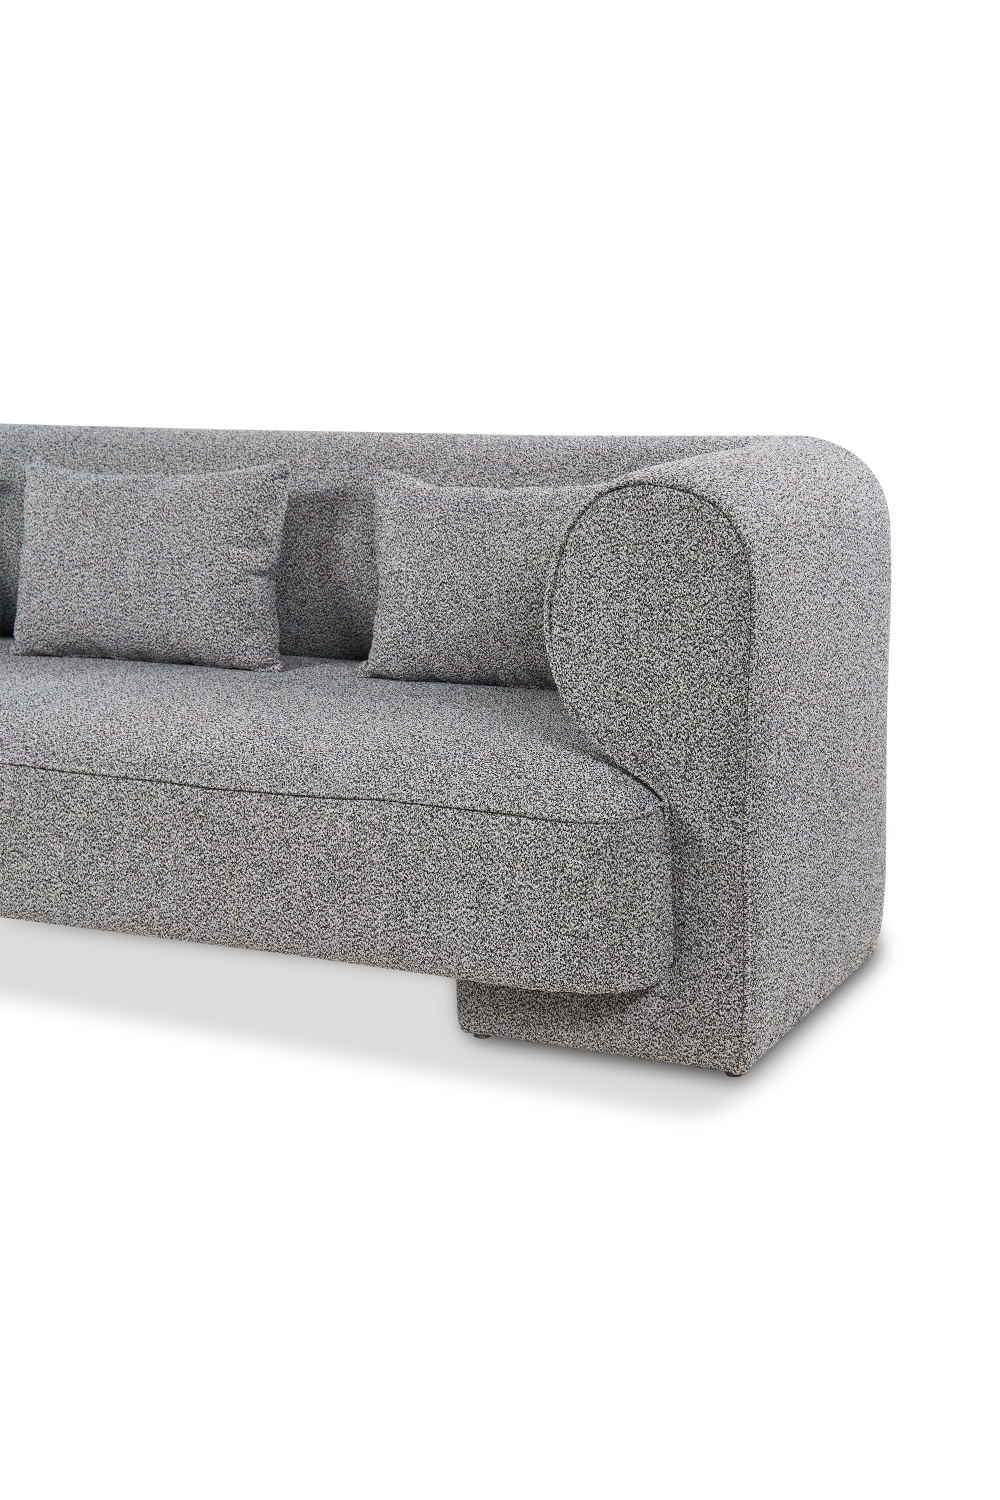 Modern Minimalist Sofa | Liang & Eimil Mitho | Oroa.com